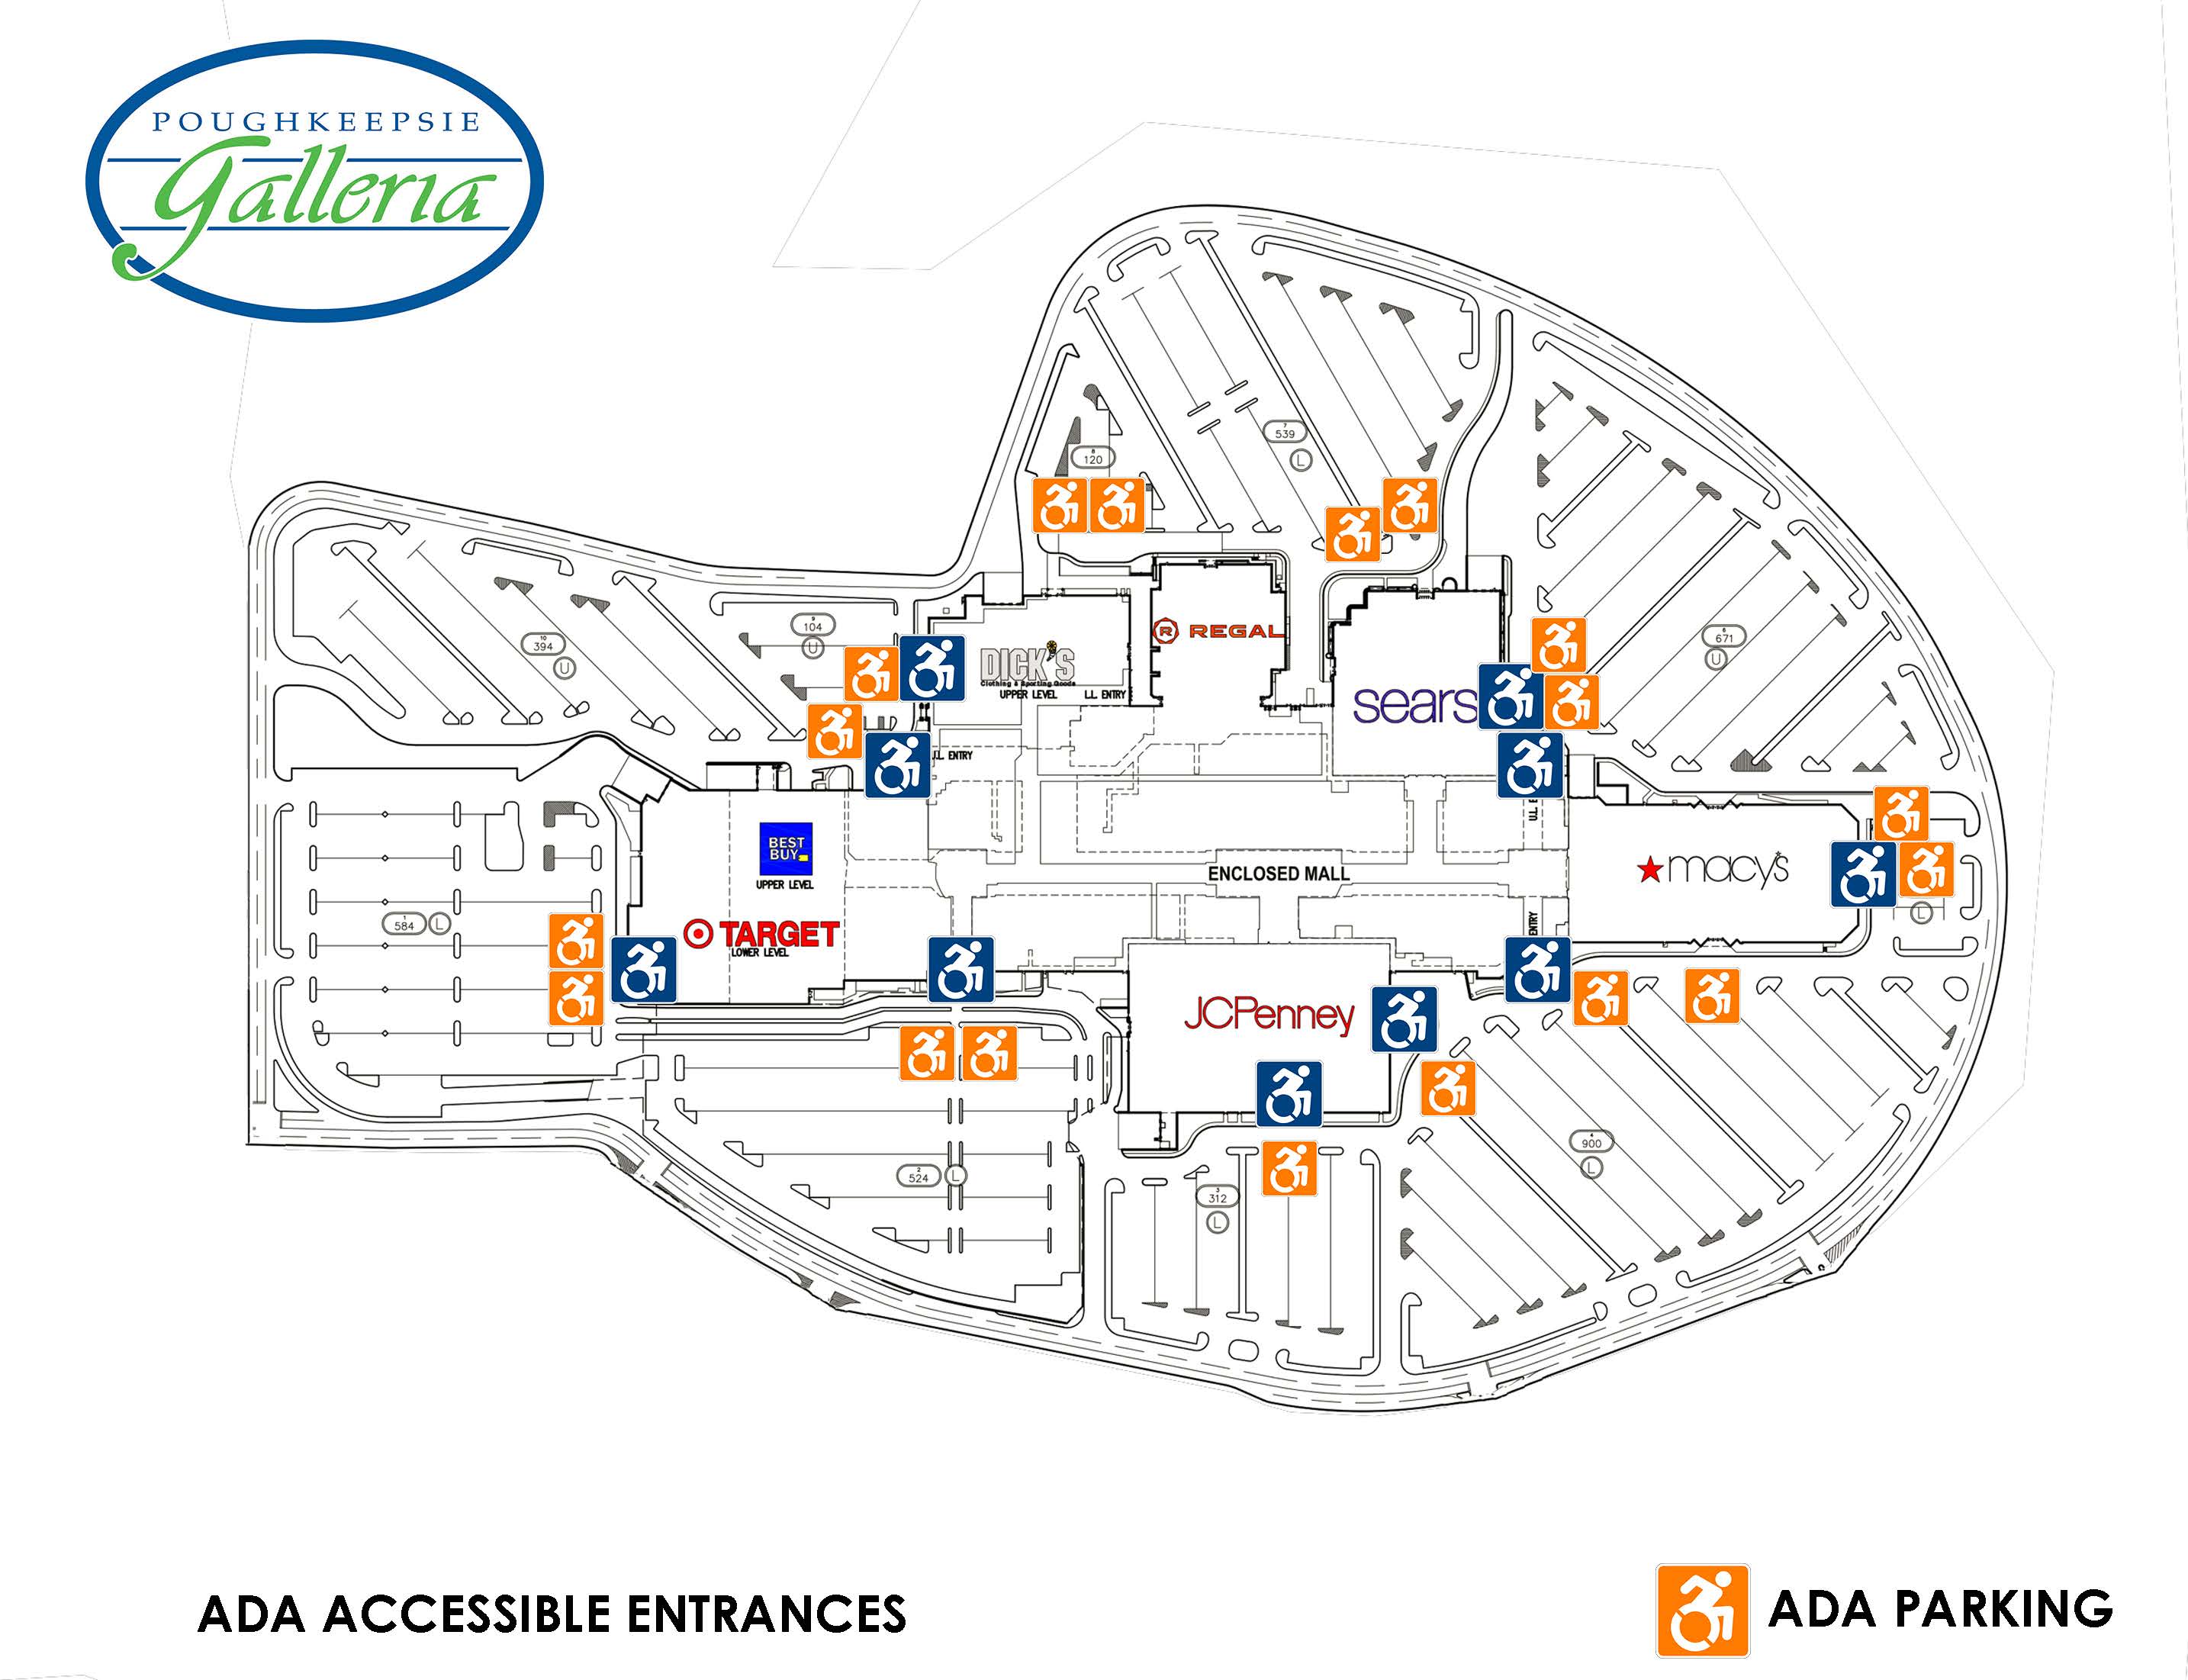 Galleria Mall Map